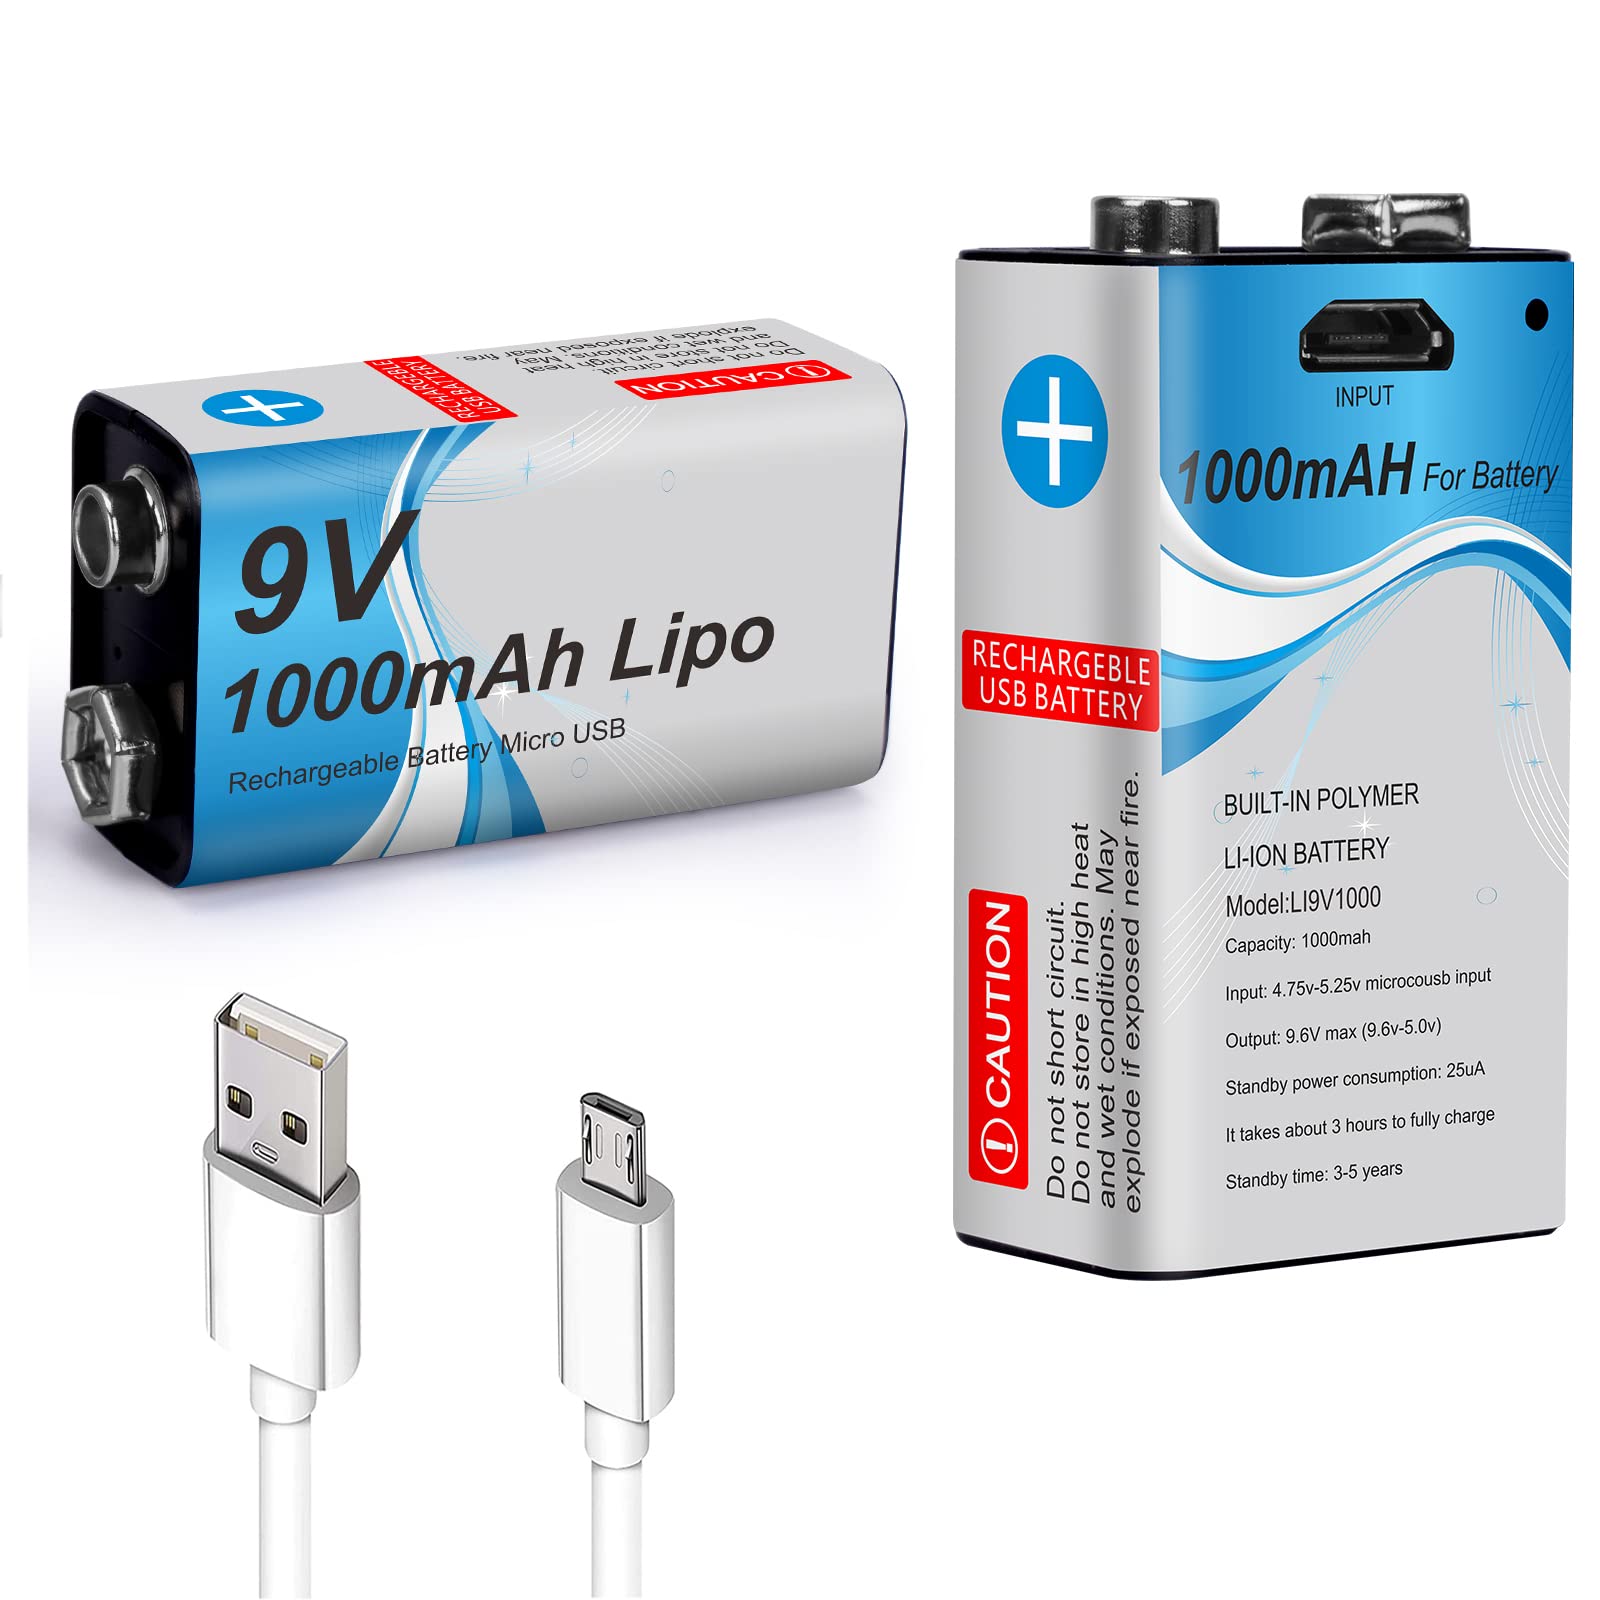 9 Volt Rechargeable Lithium Battery 1000mAh Capacity,USB Quick